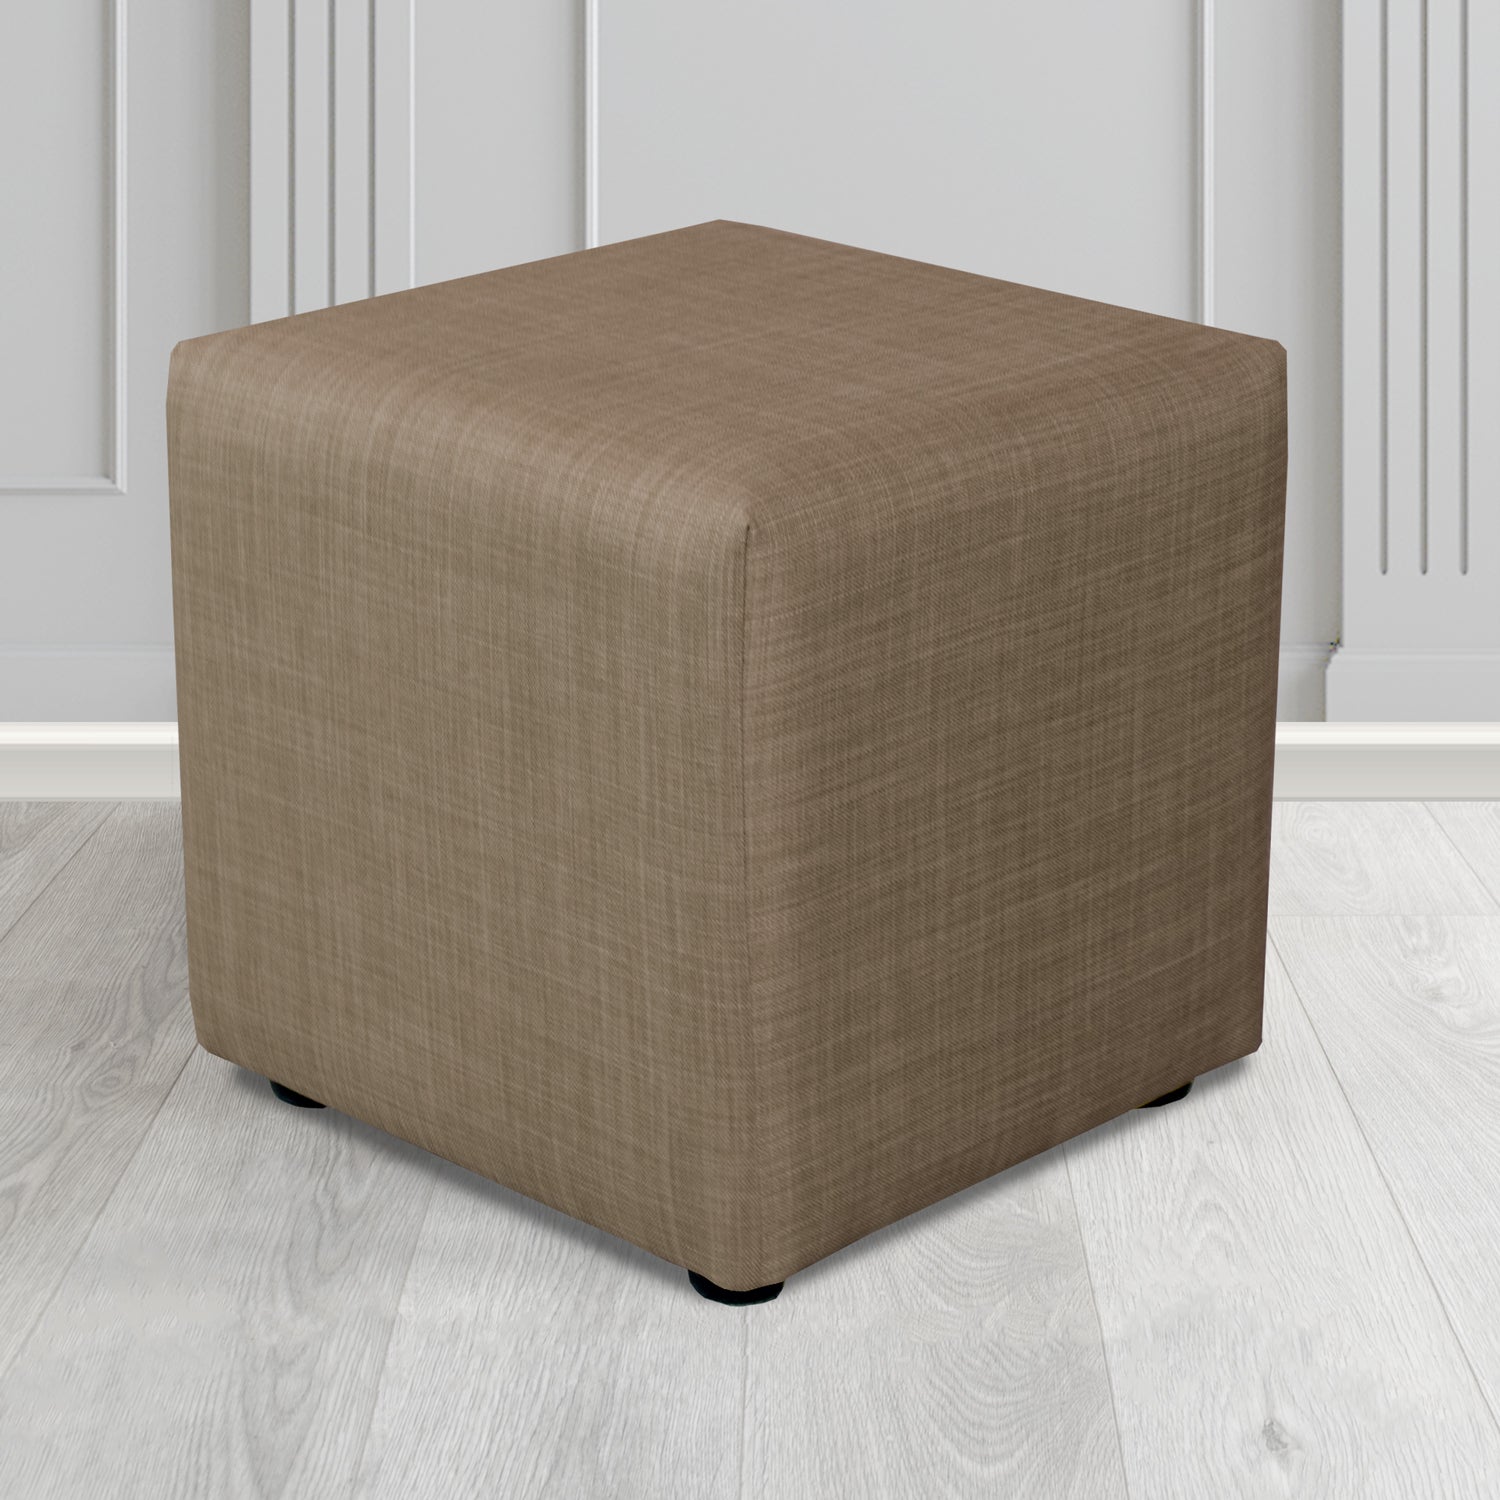 Paris Charles Nutmeg Plain Linen Fabric Cube Footstool - The Tub Chair Shop